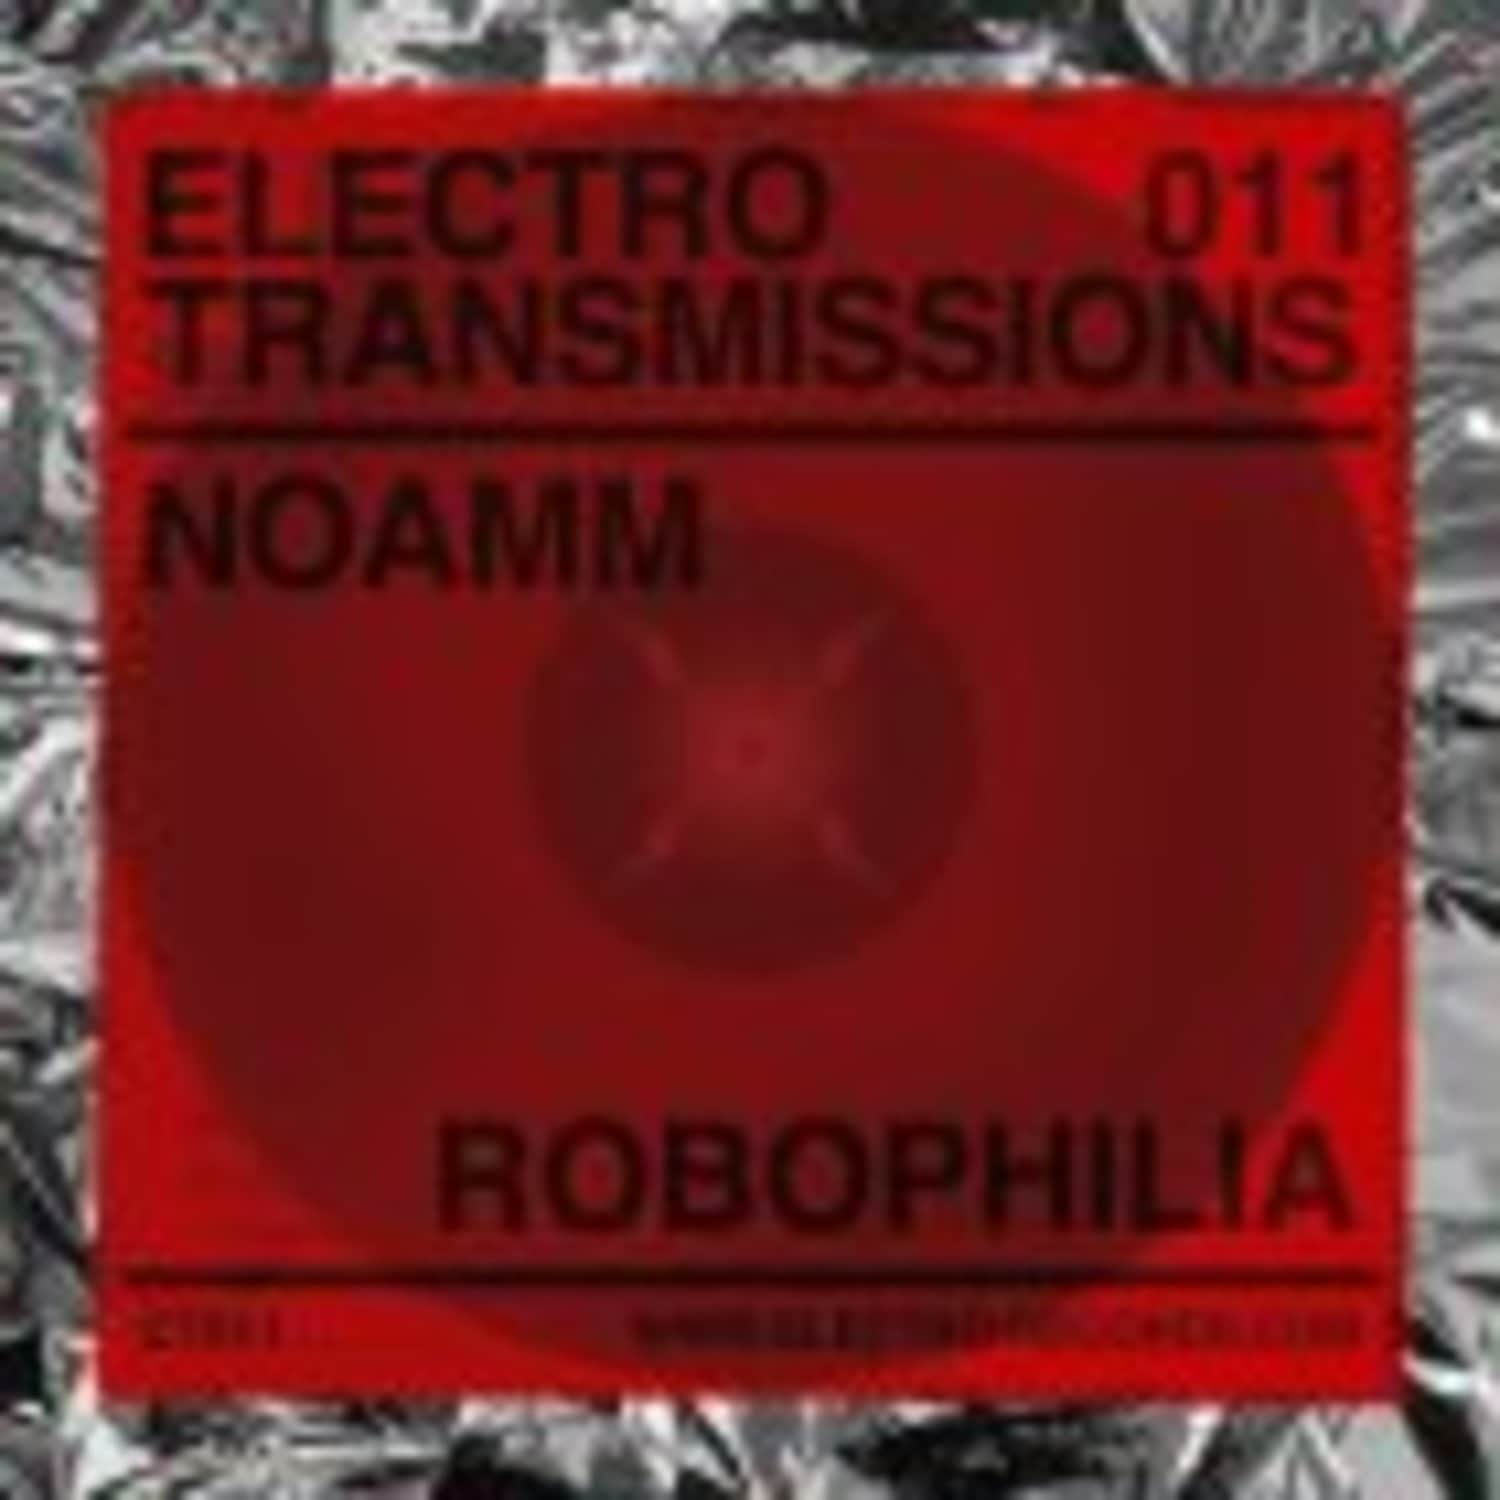 Noamm - ELECTRO TRANSMISSIONS 011 ROBOPHILIA 